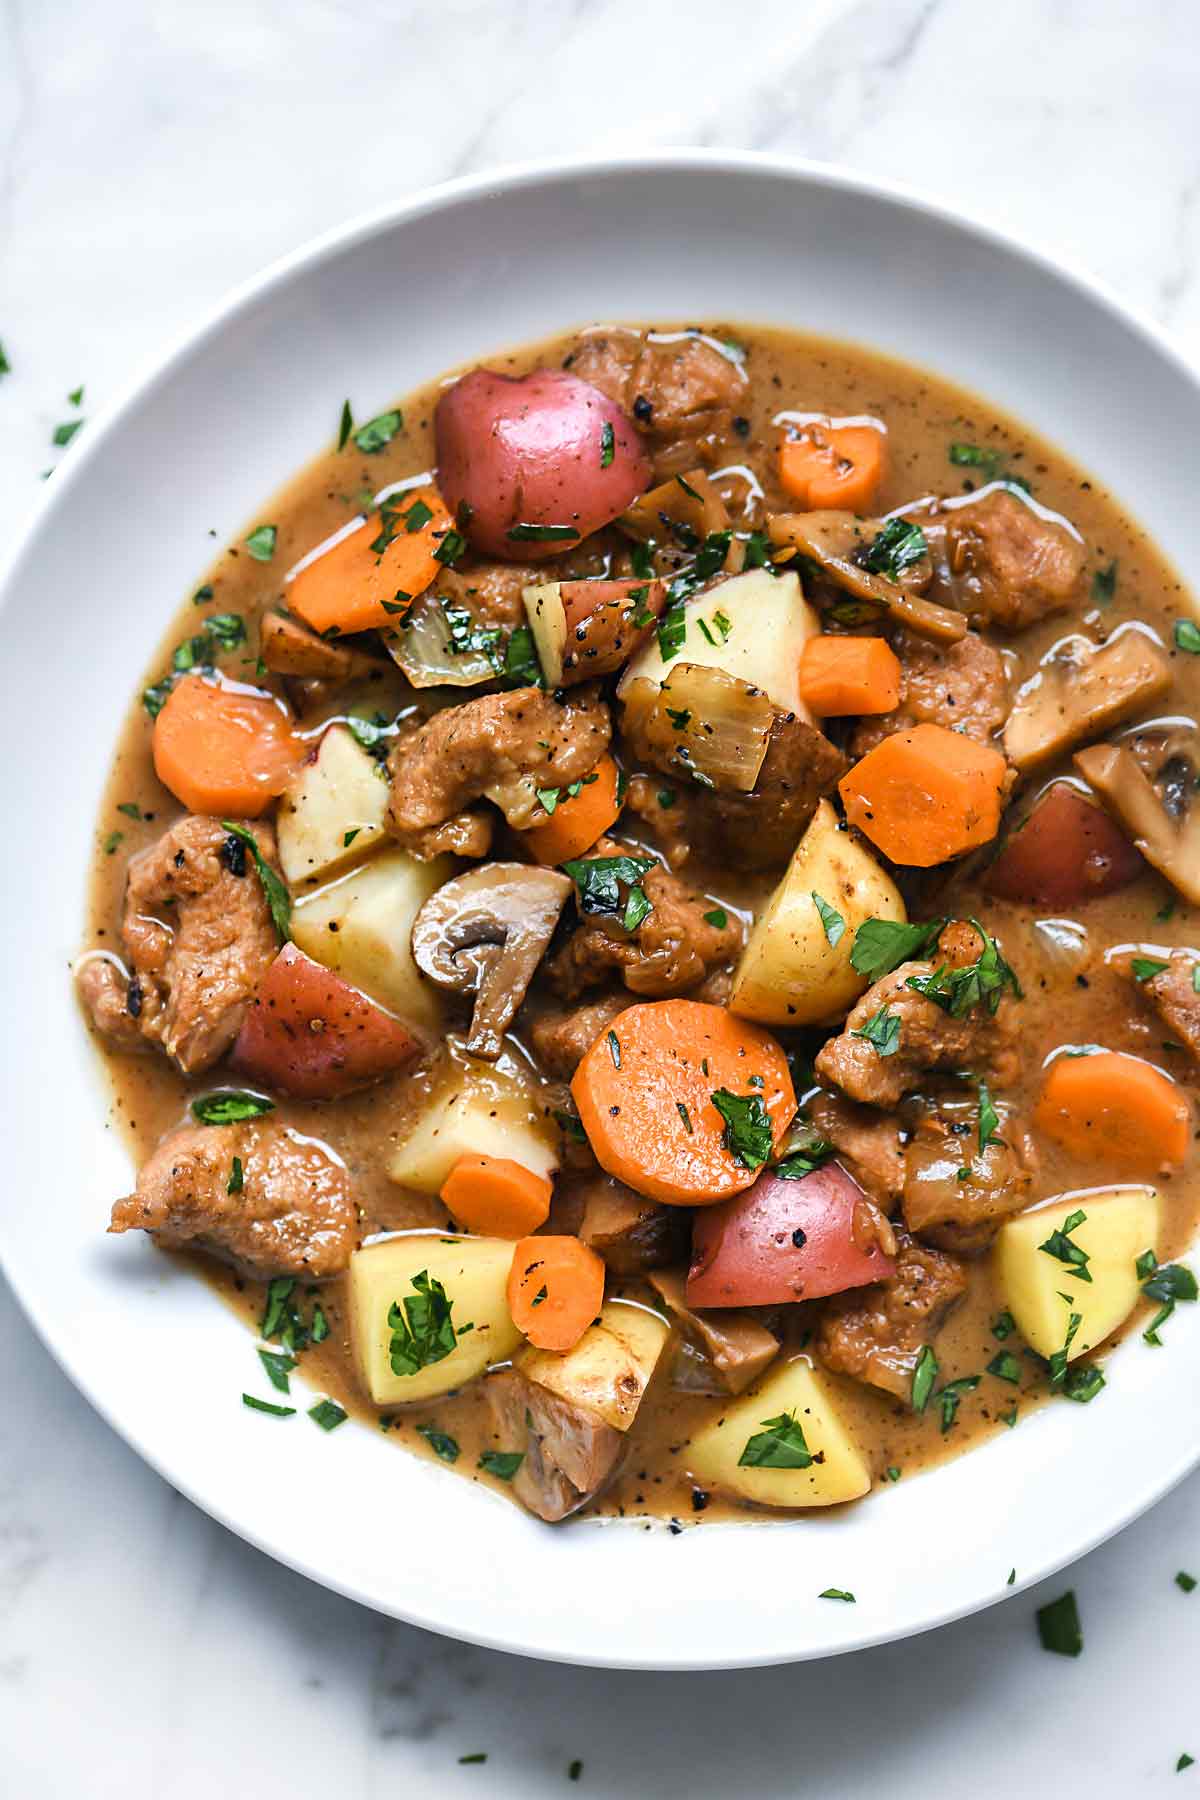 Recipes for sauteed pork stew